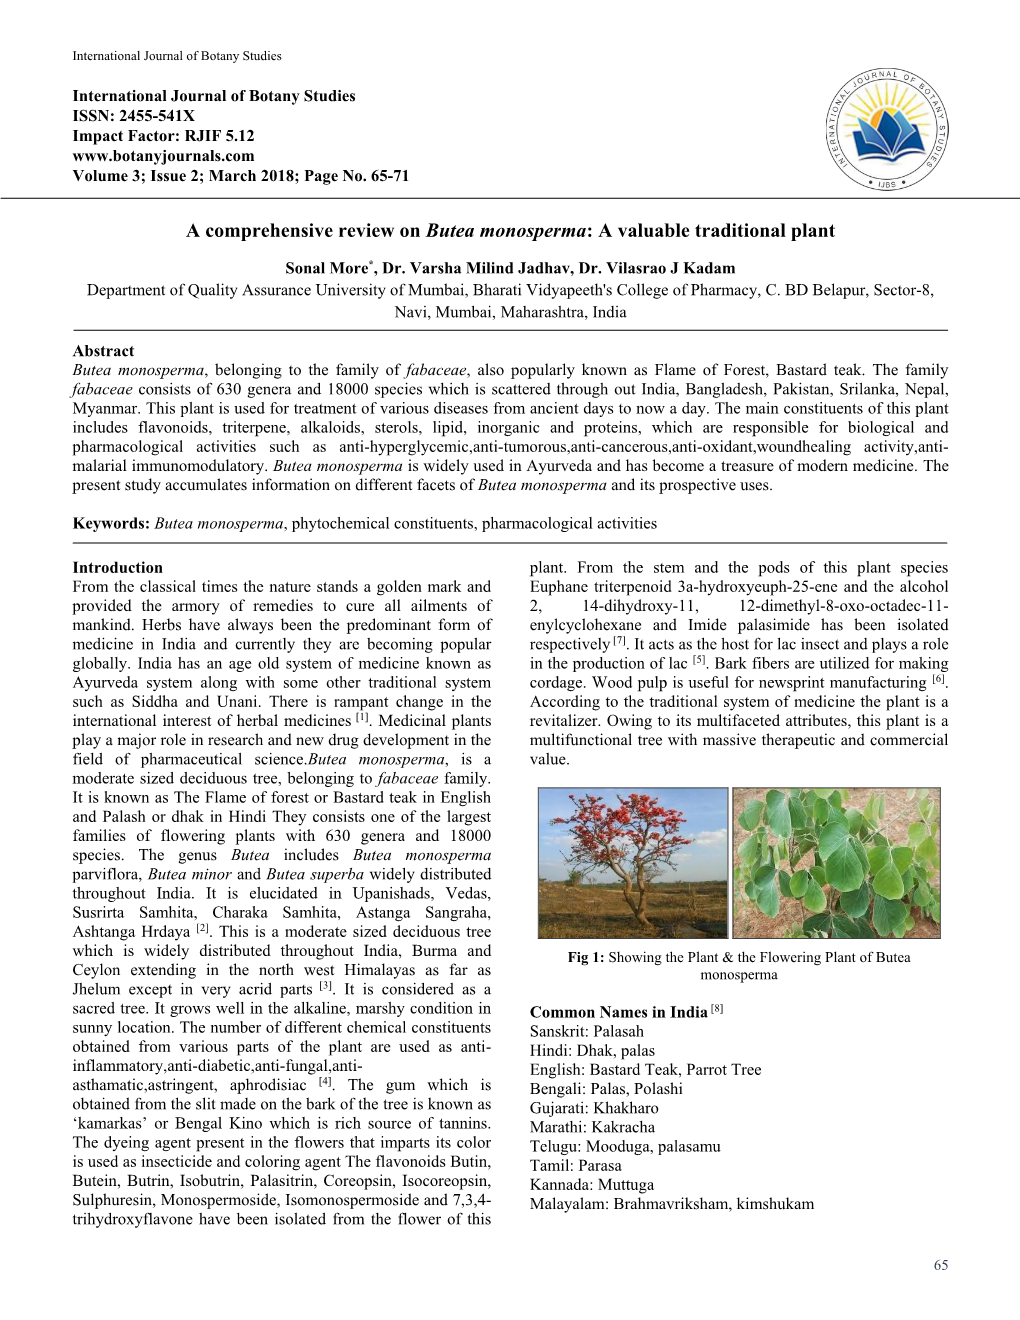 A Comprehensive Review on Butea Monosperma: a Valuable Traditional Plant